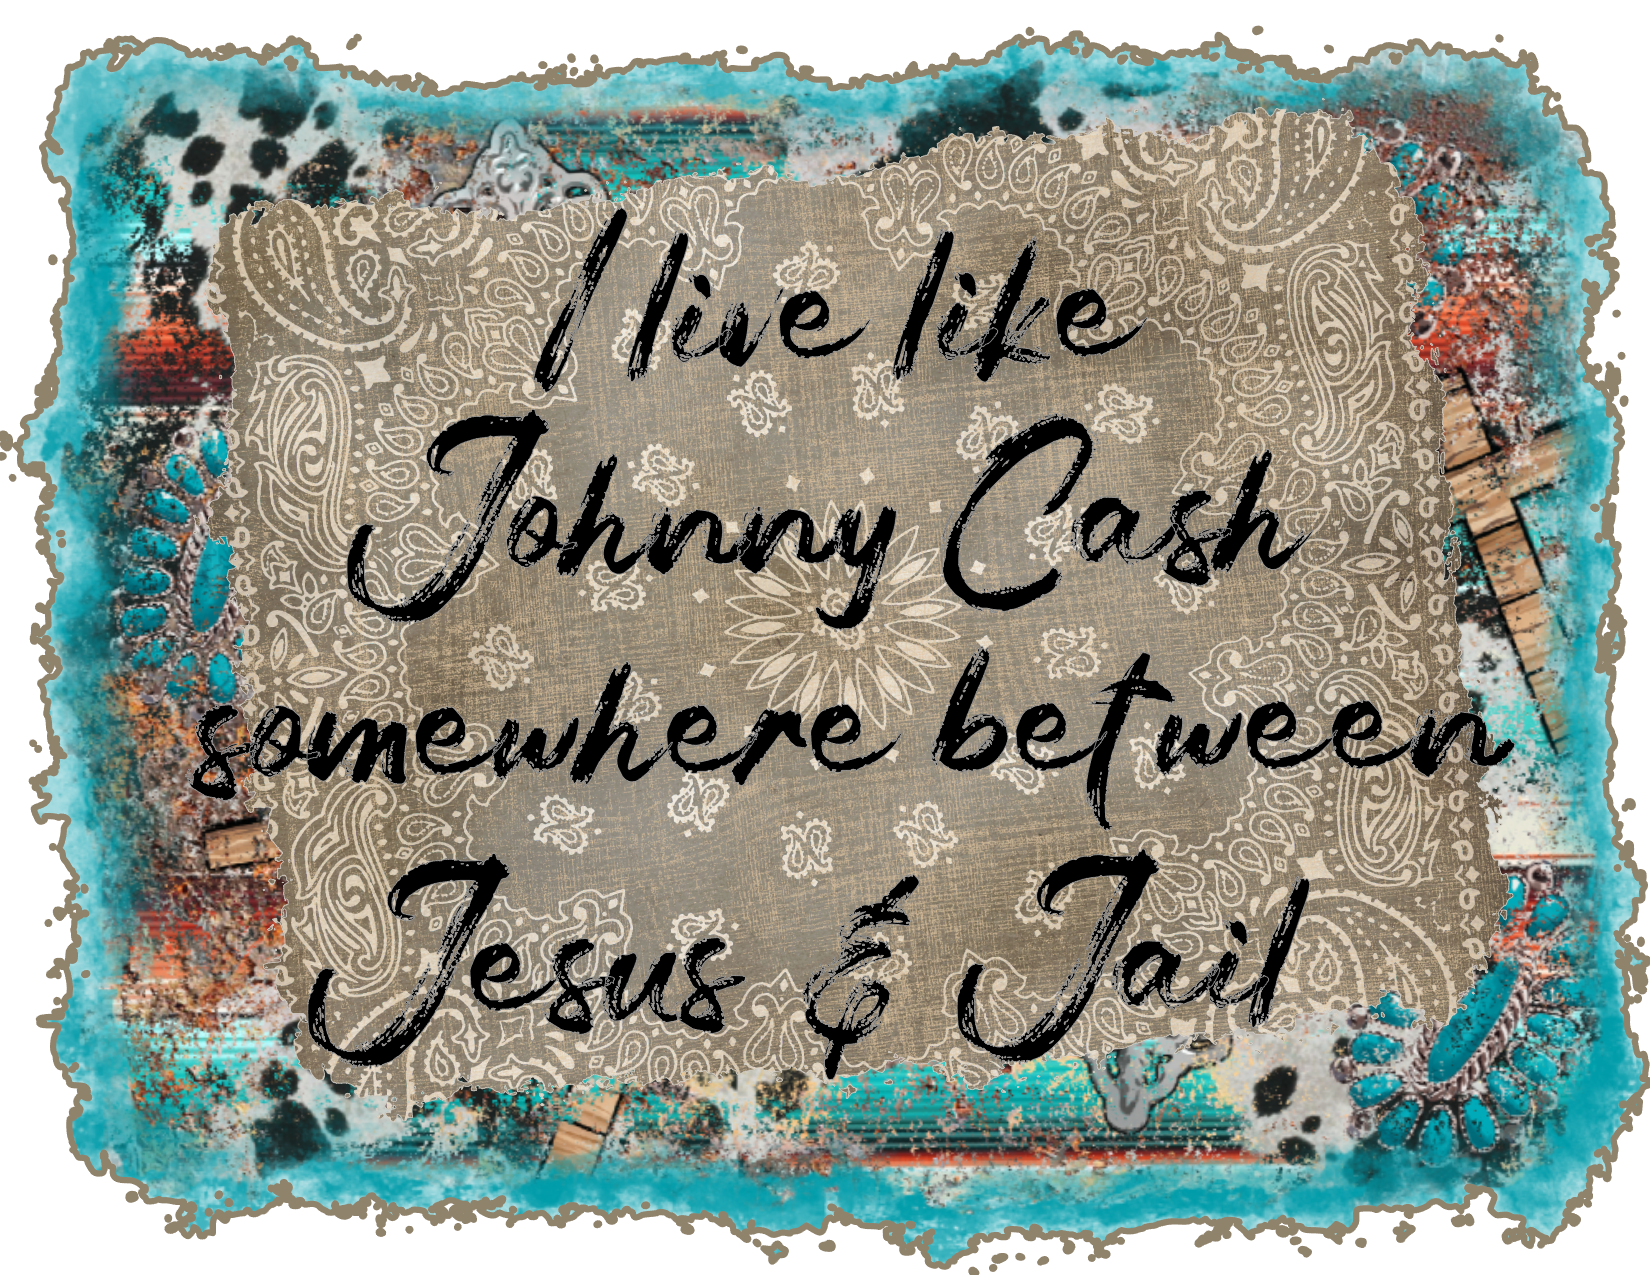 #203 Johnny Cash- I live like Johnny Cash Somewhere Between Jesus & Jail